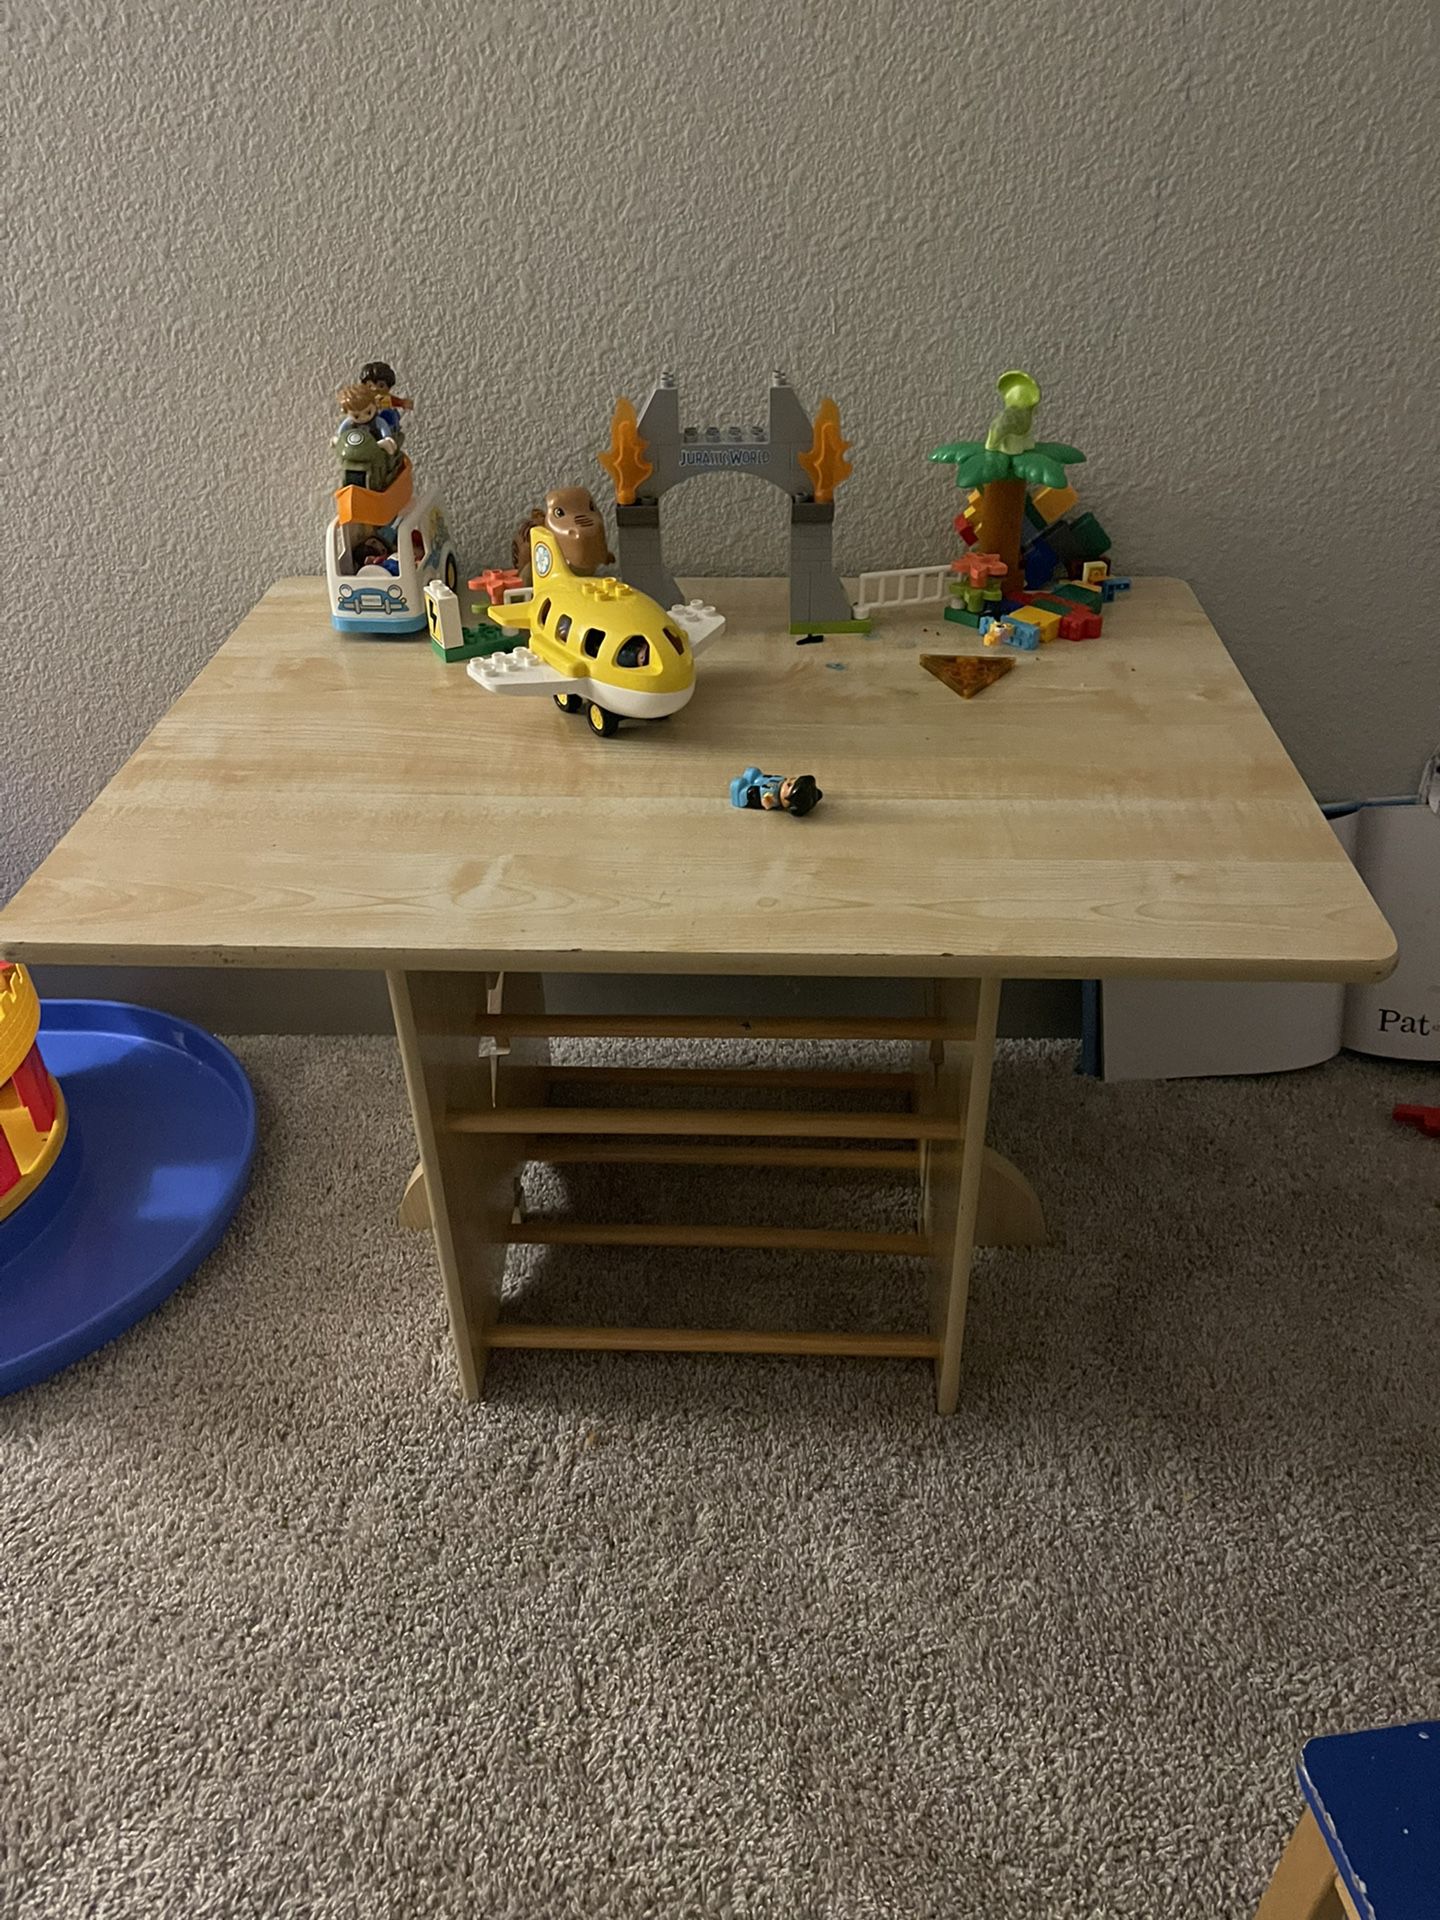 Wooden Desk For Kids 